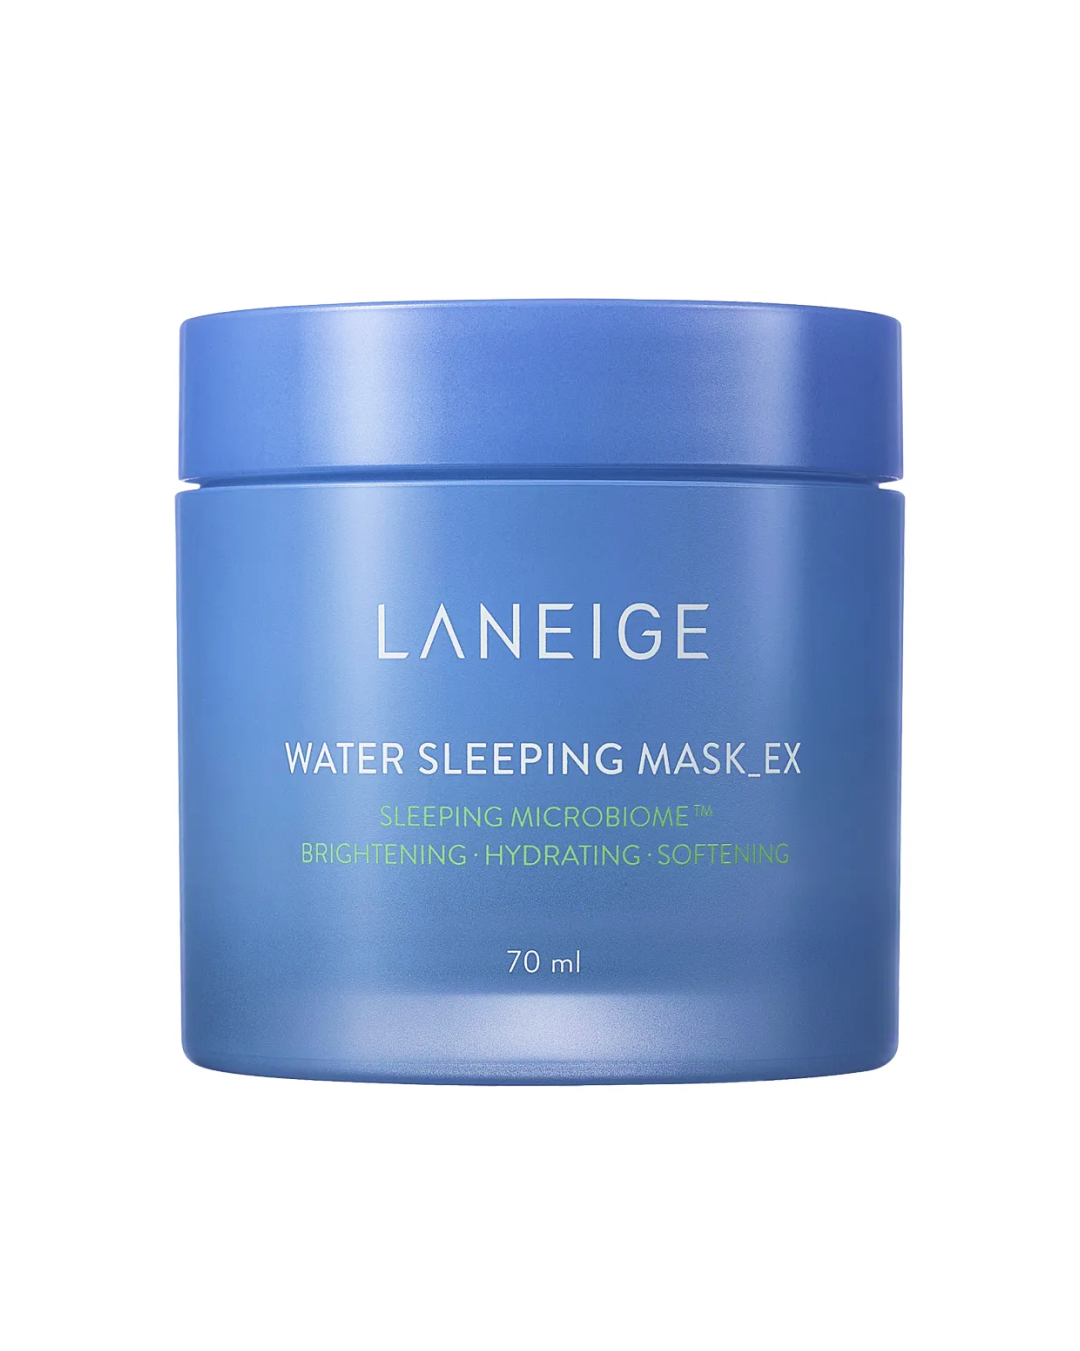 Laneige Water Sleeping Mask EX (70ml) - Best Buy World Philippines